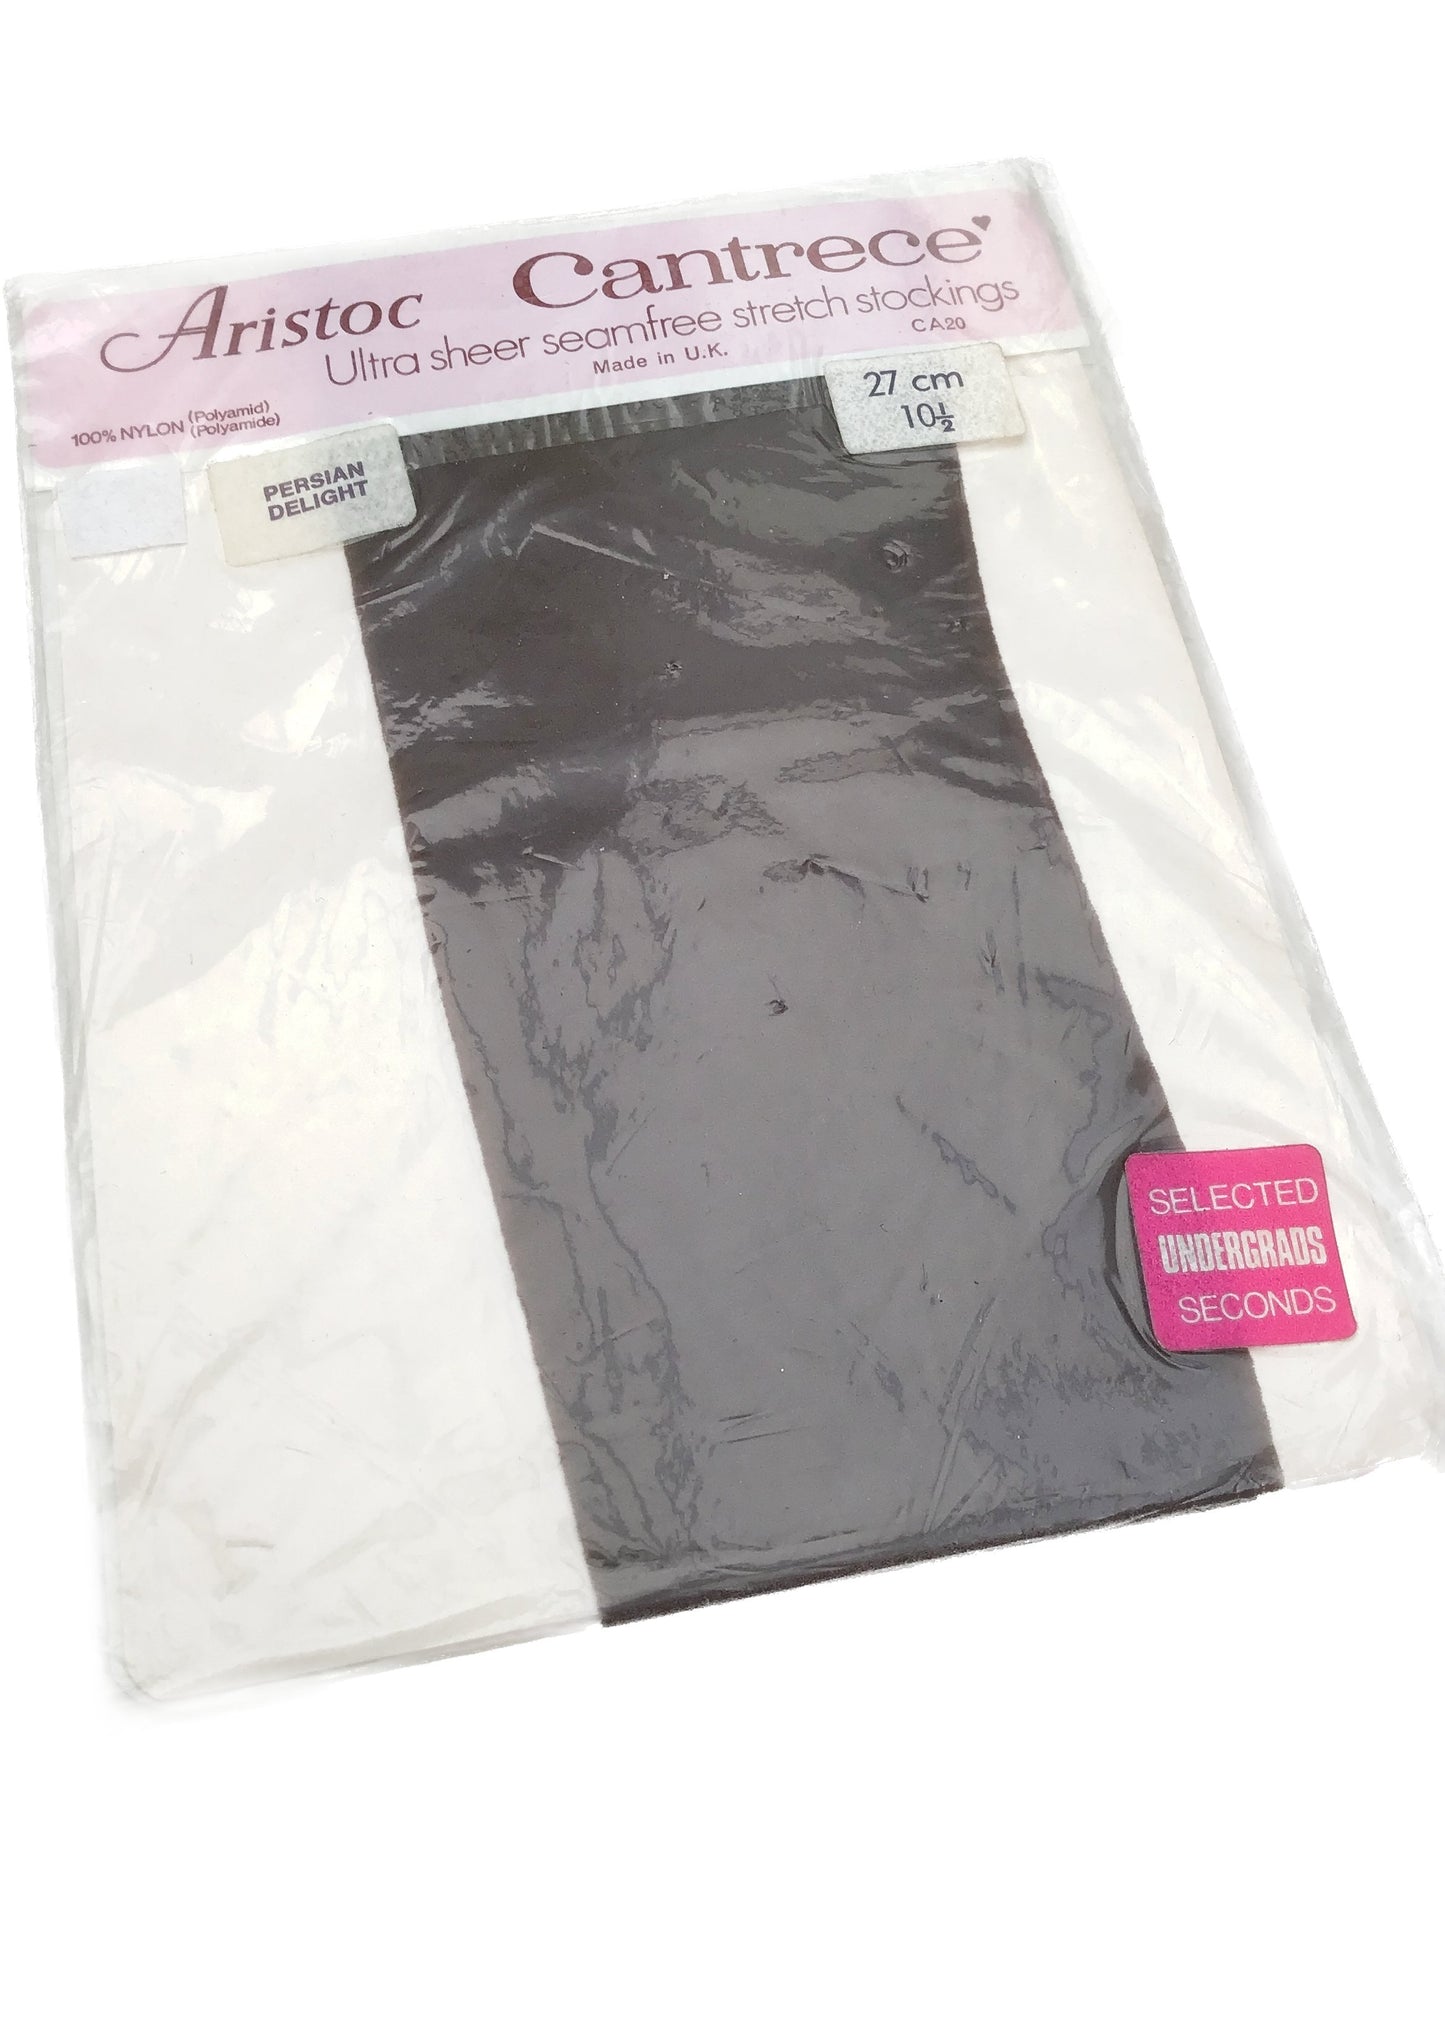 Aristoc Cantrece Ultra Sheer Stockings • Persian Delight